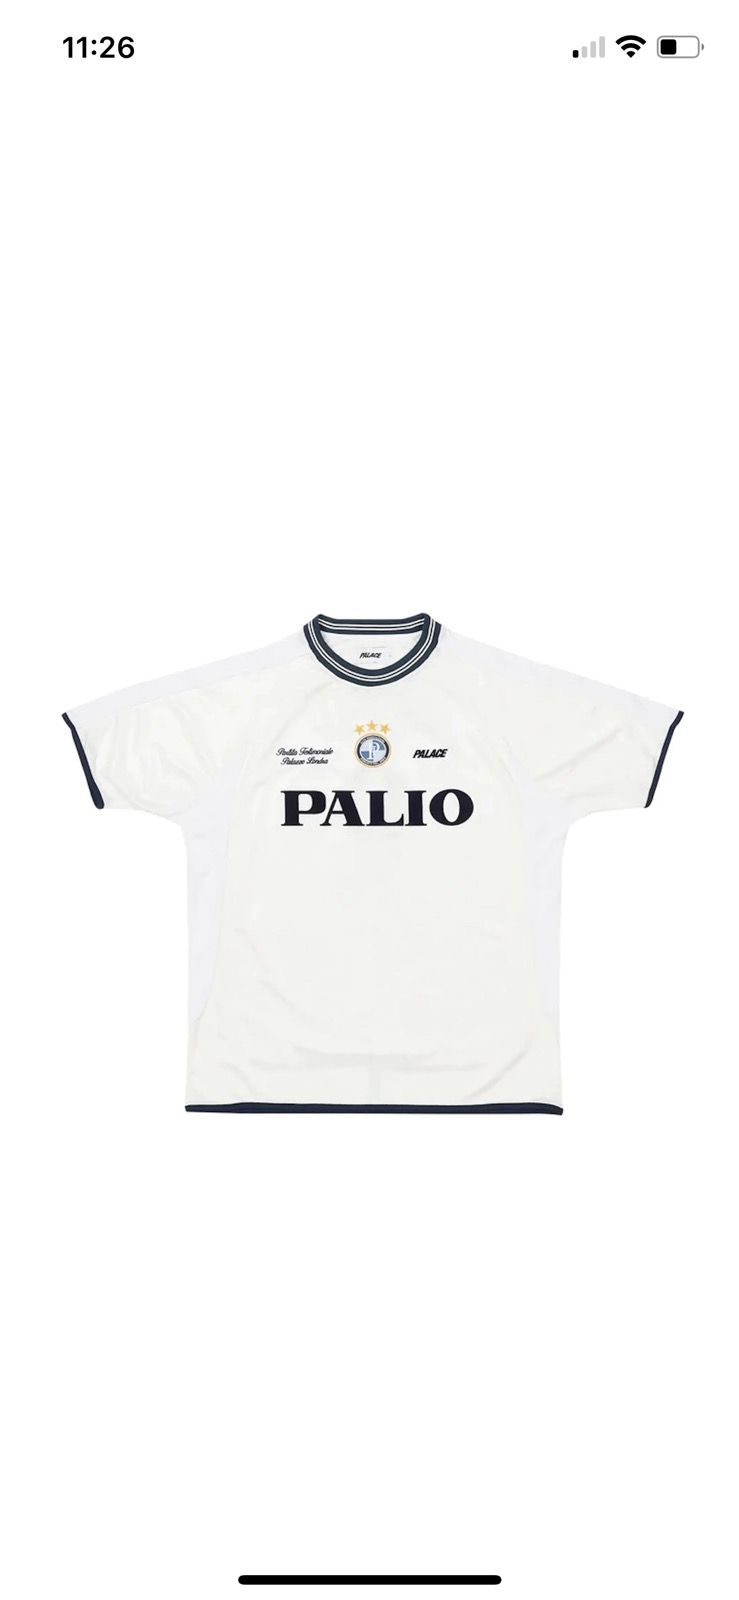 Palace Palace Legends Football Jersey White/Navy - Size Large